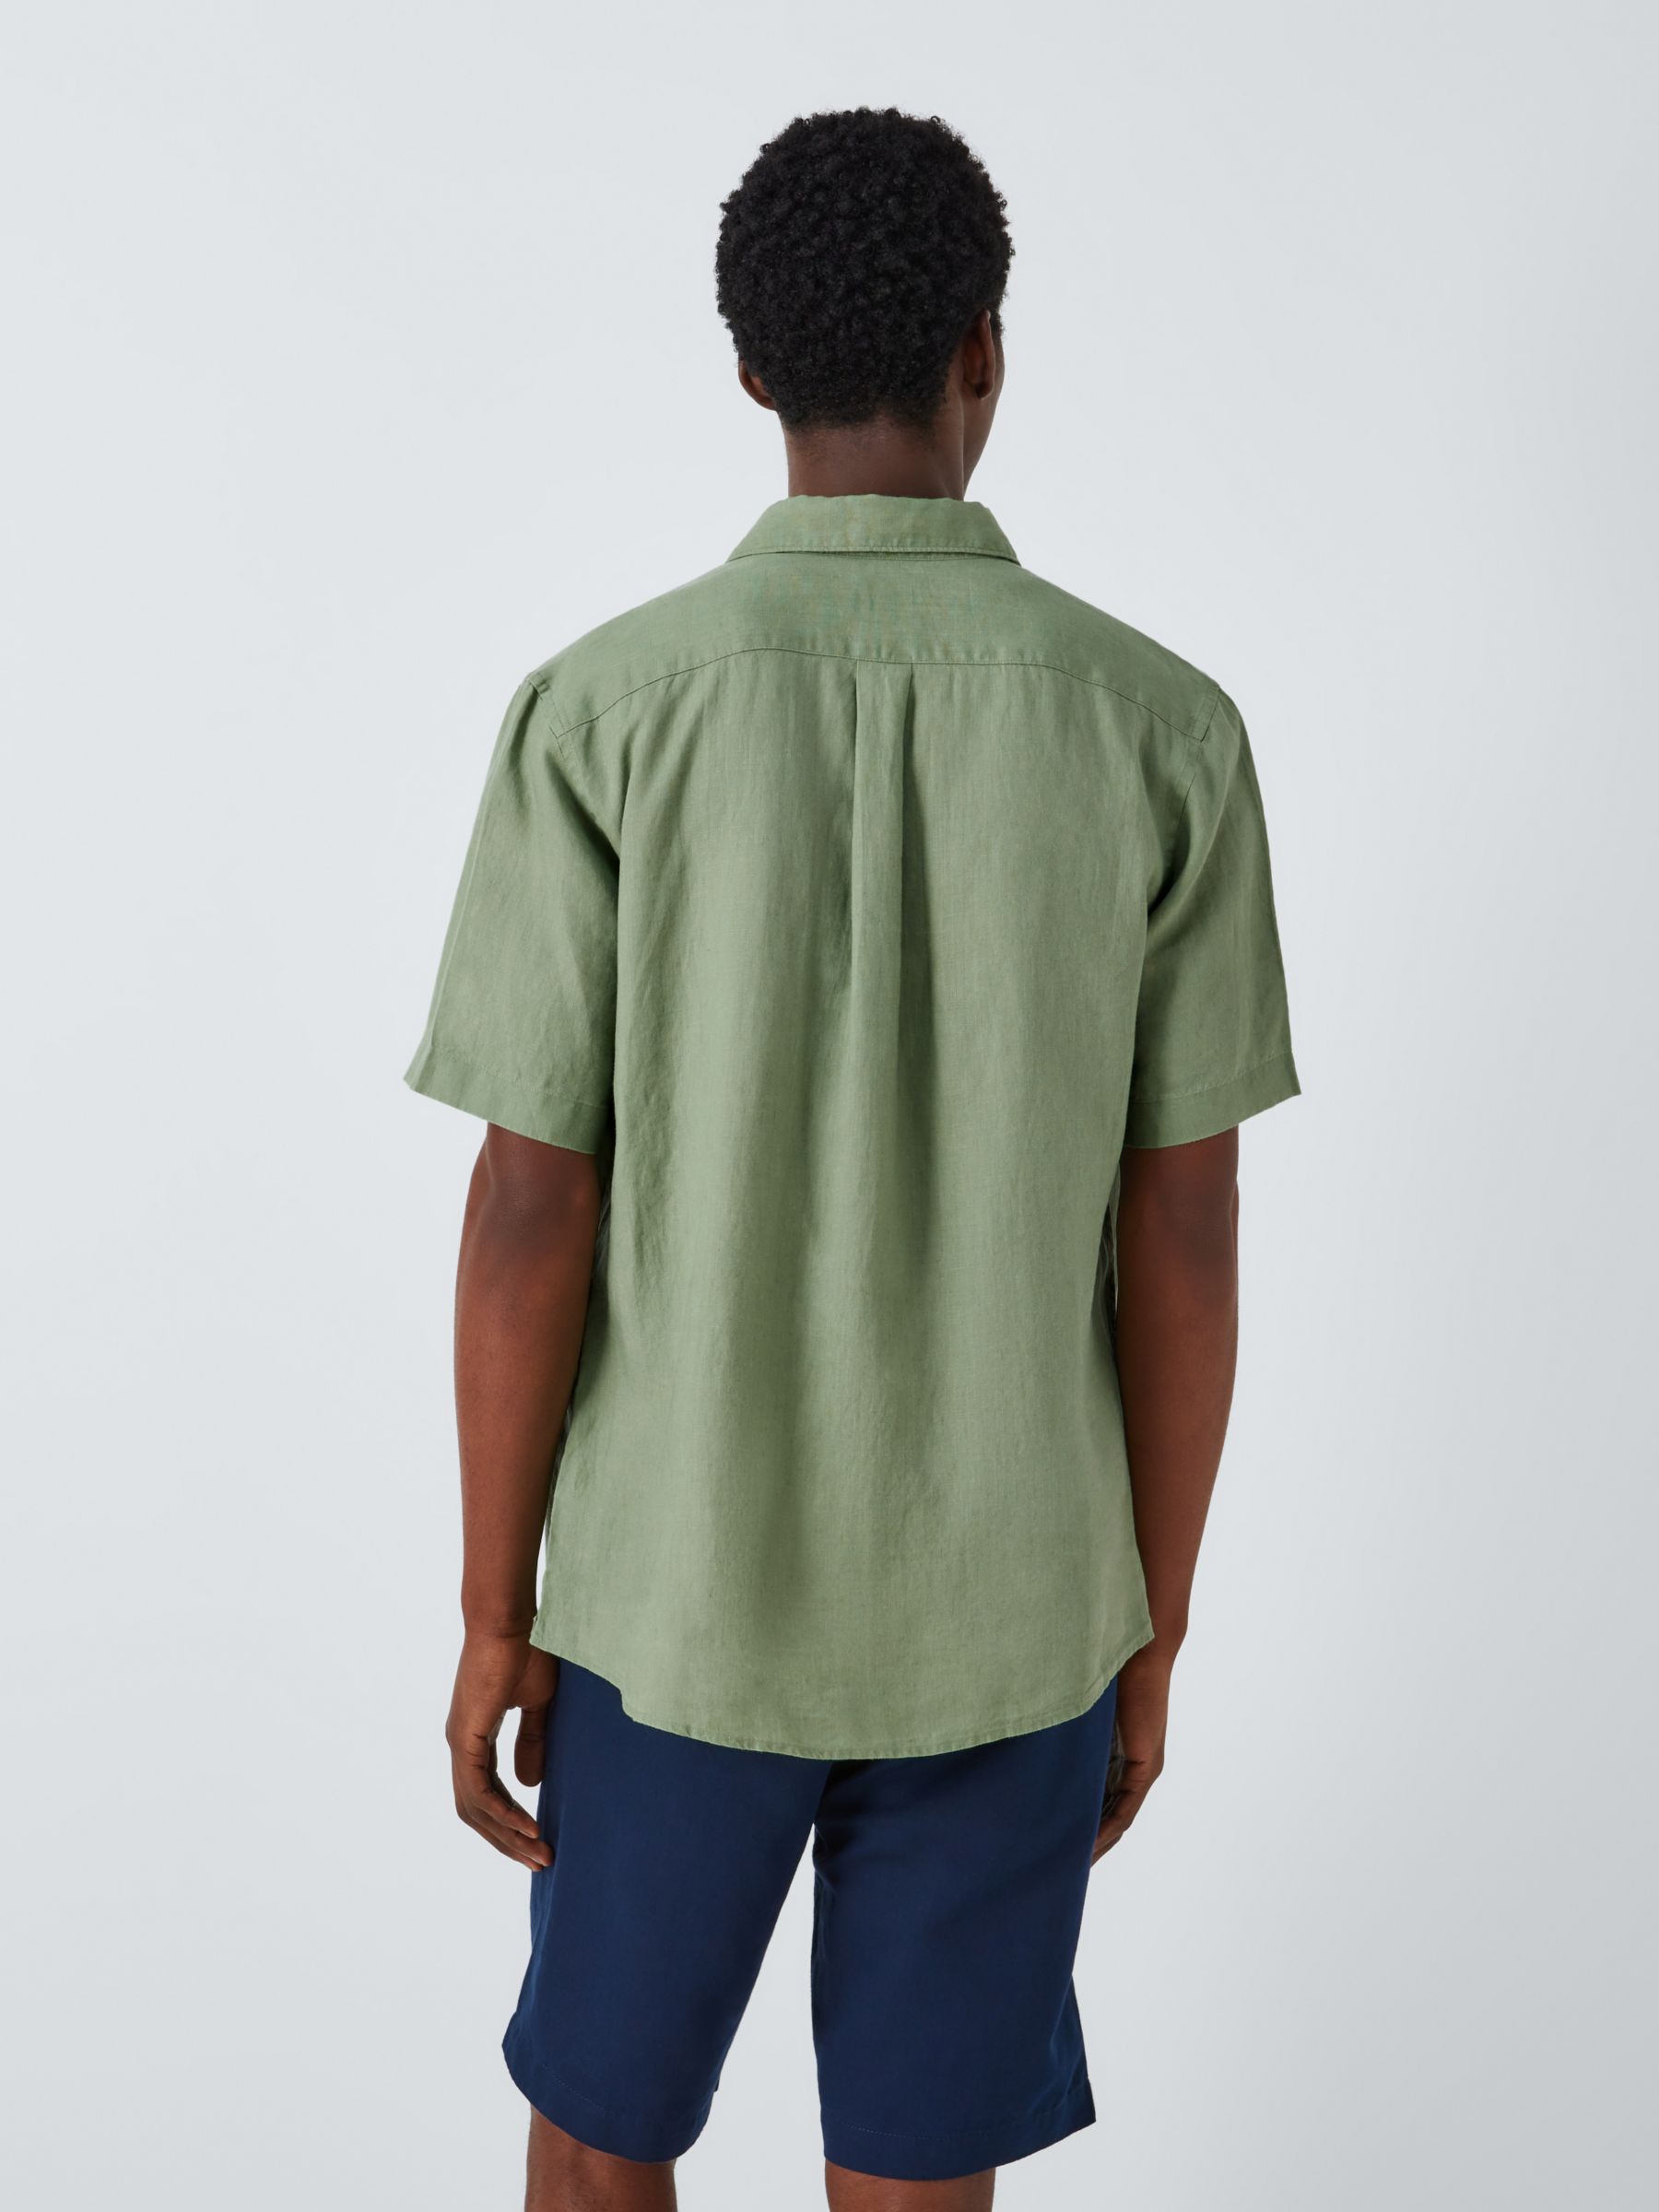 Buy John Lewis Linen Short Sleeve Shirt Online at johnlewis.com